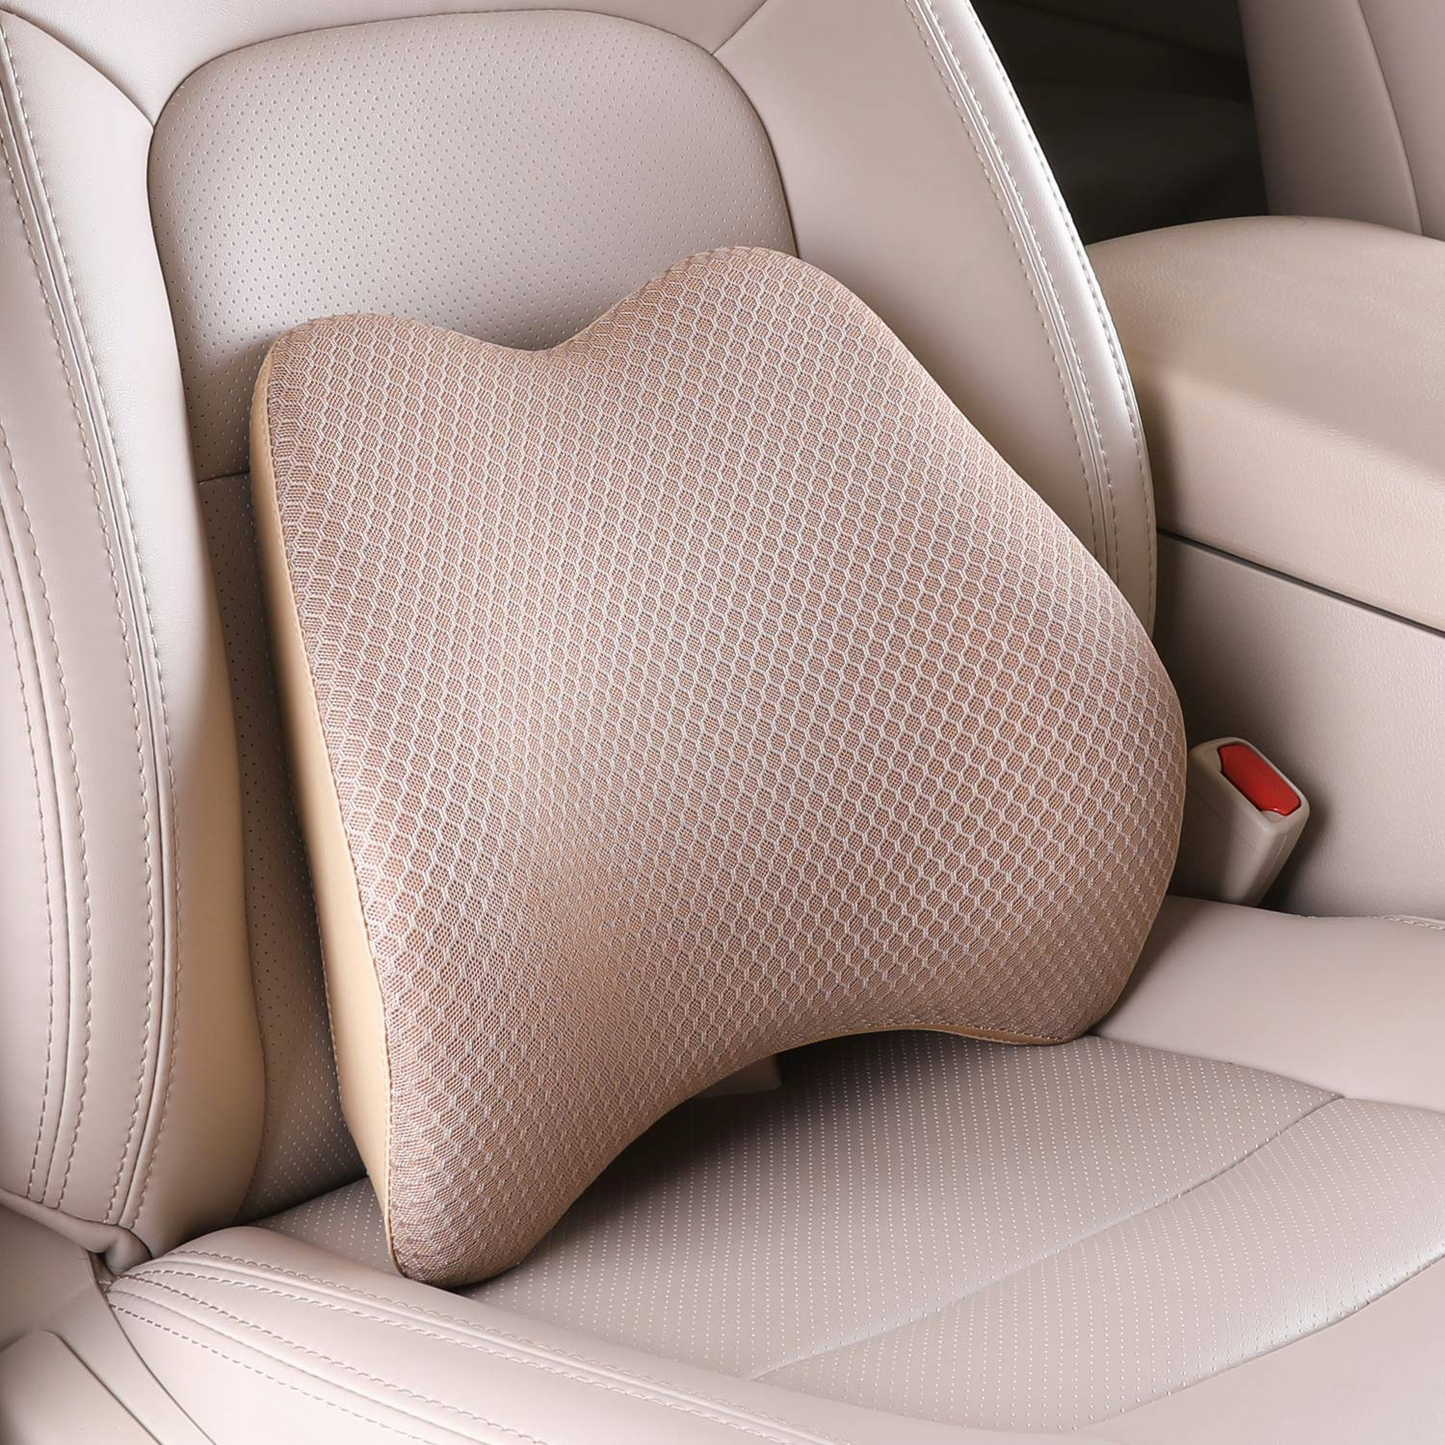 1X Car Seat Lumbar Support Pillow Back Support Cushion Memory Foam for Car  Truck